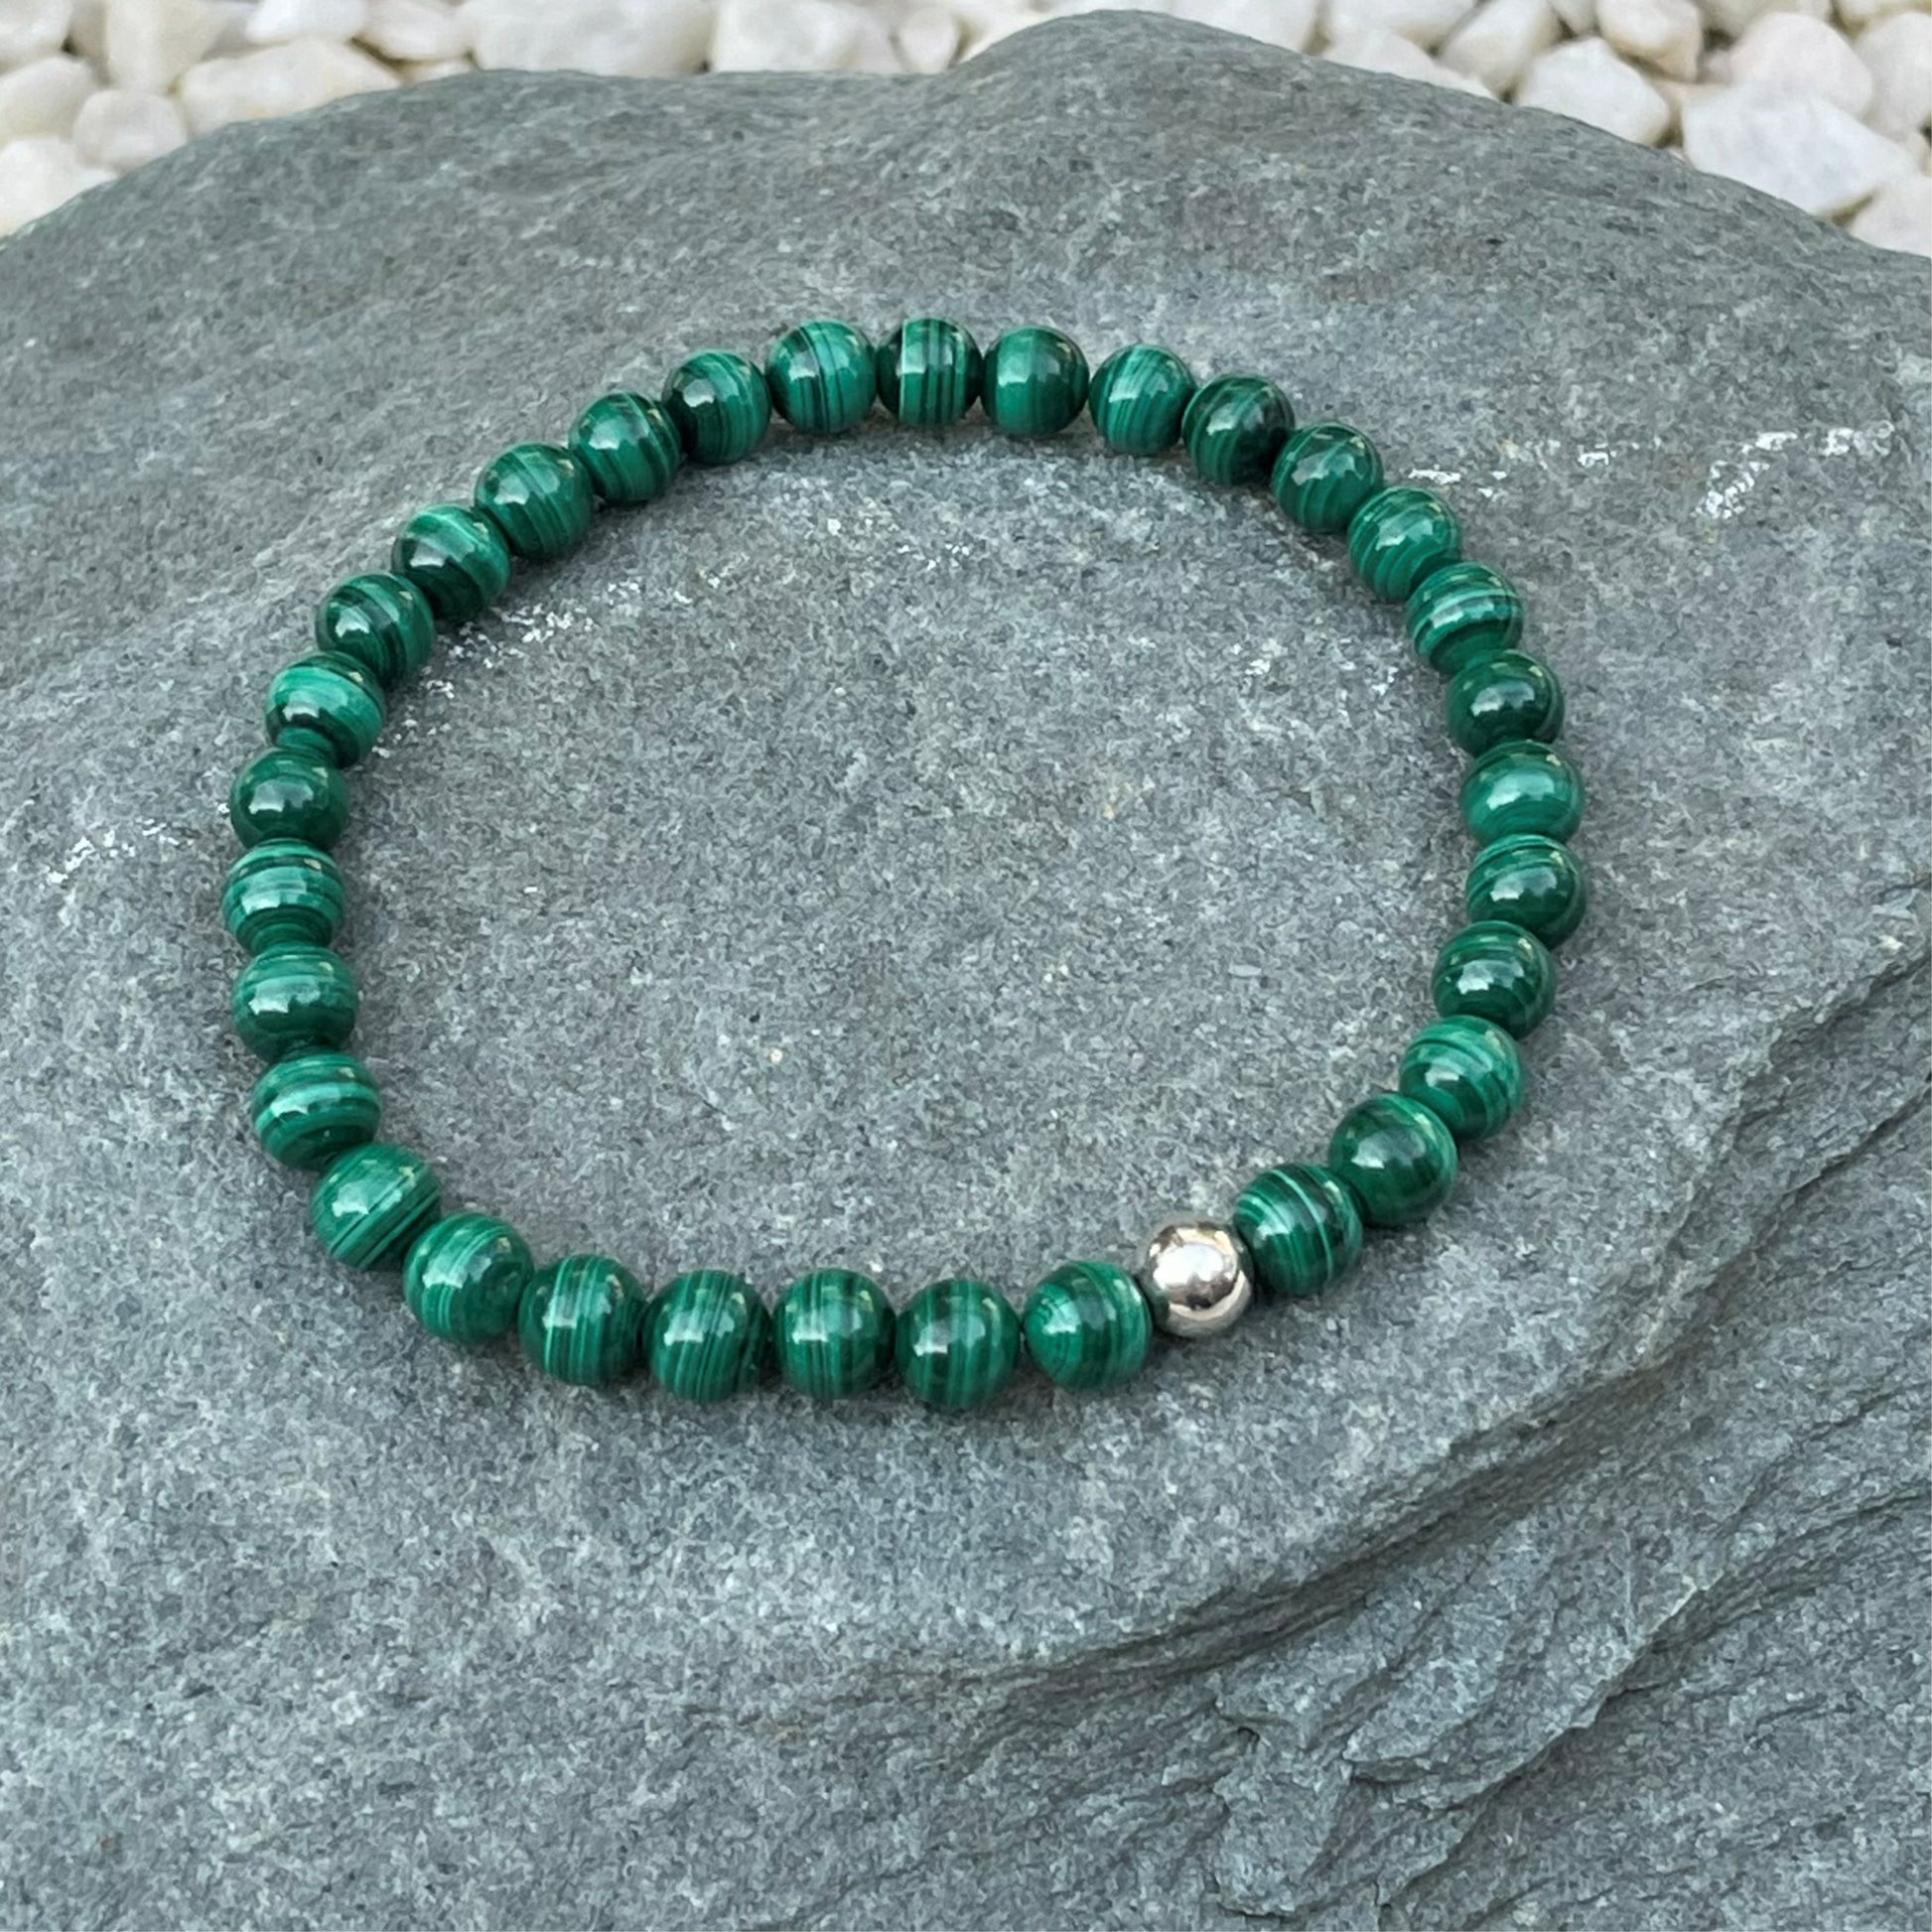 Green crystal bracelet on stone